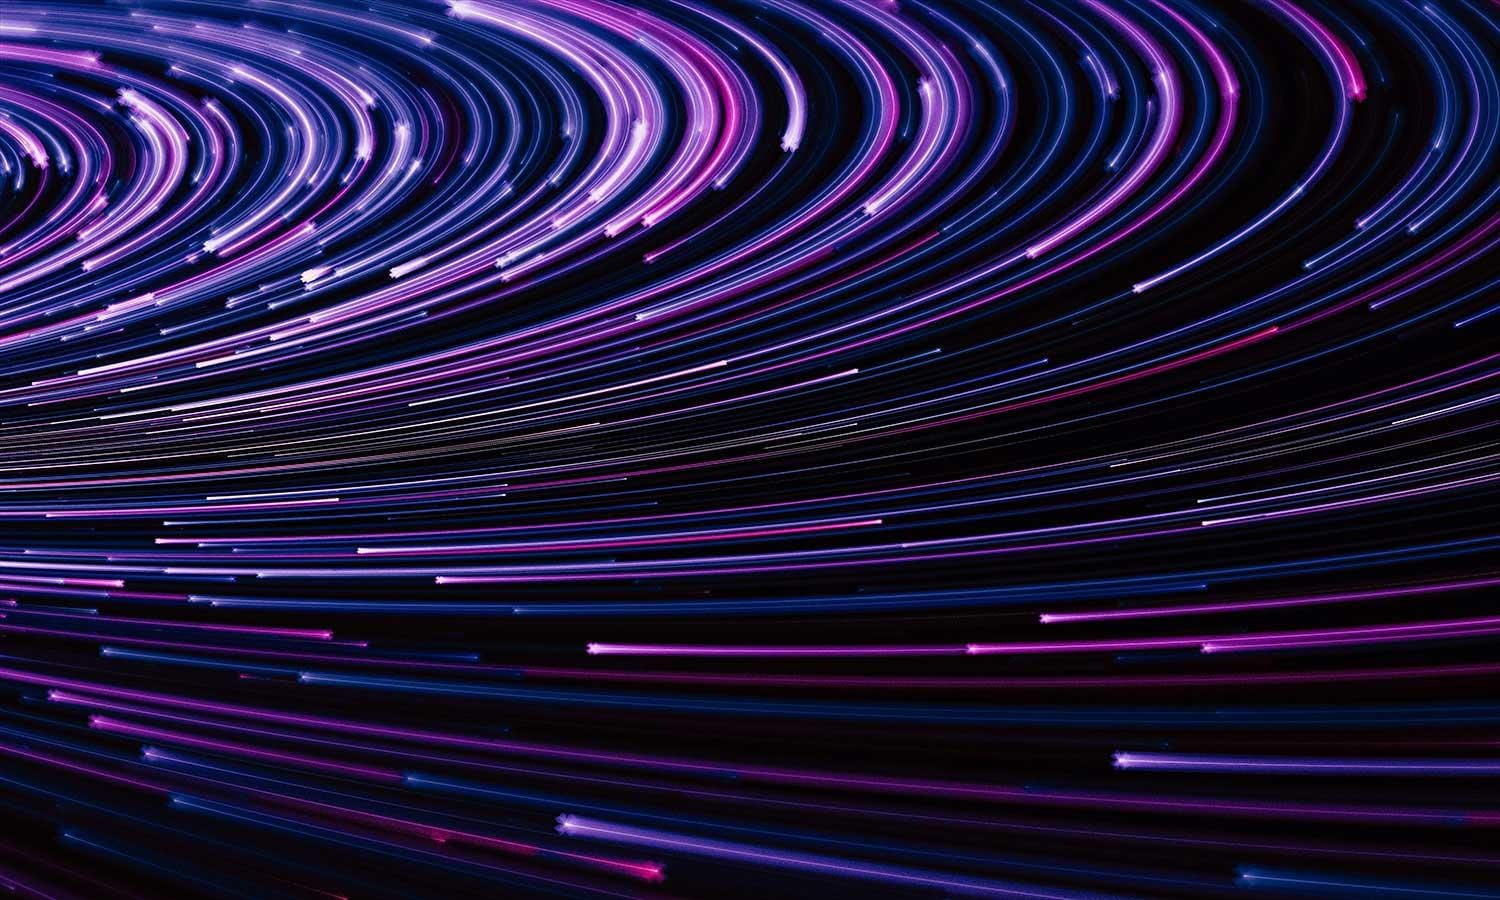 Abstract purple optical fibers on black background